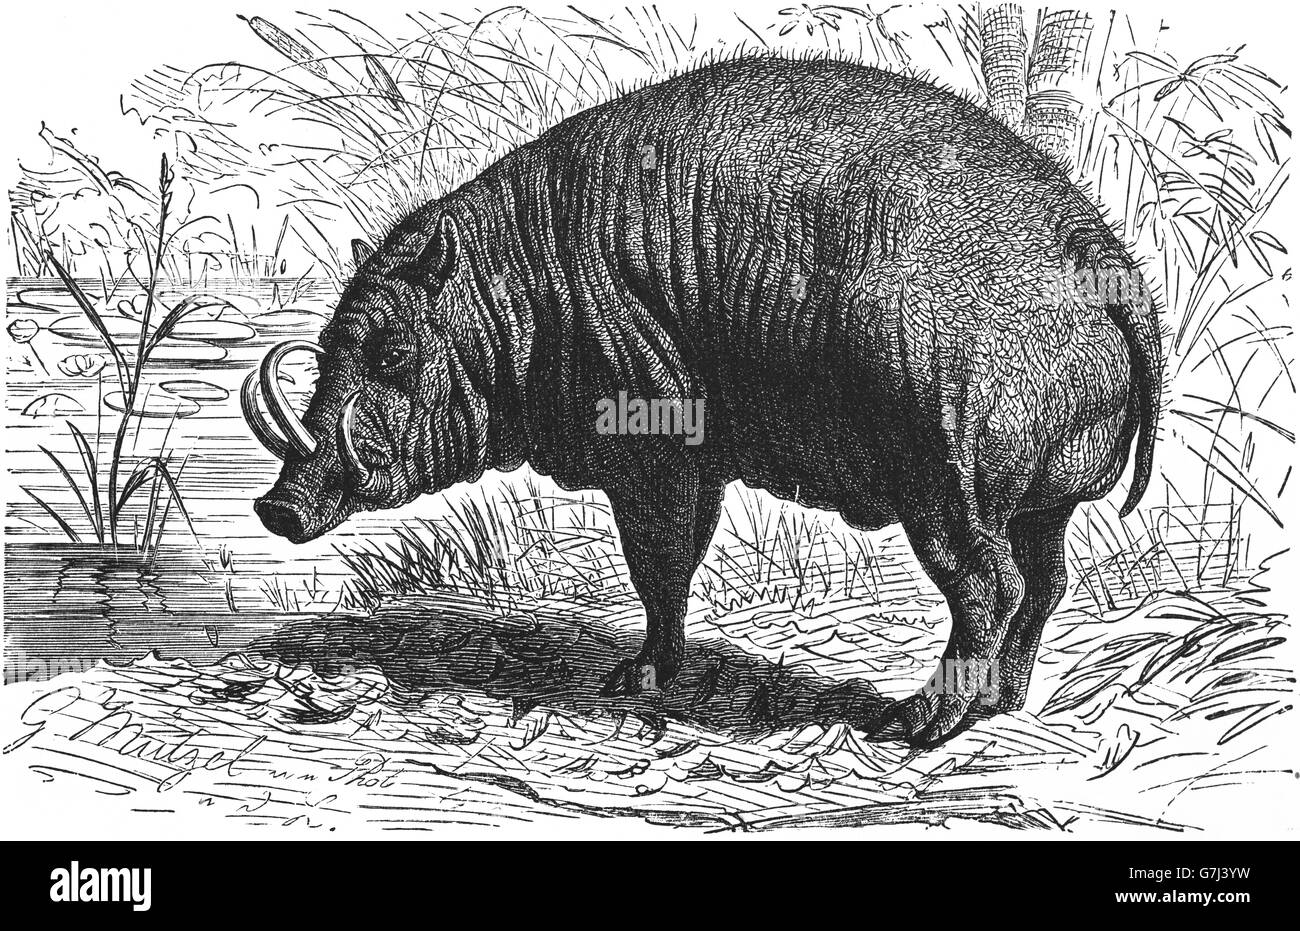 Babirusa, pig-deer, Babyrousa, Suidae, illustration from book dated 1904 Stock Photo